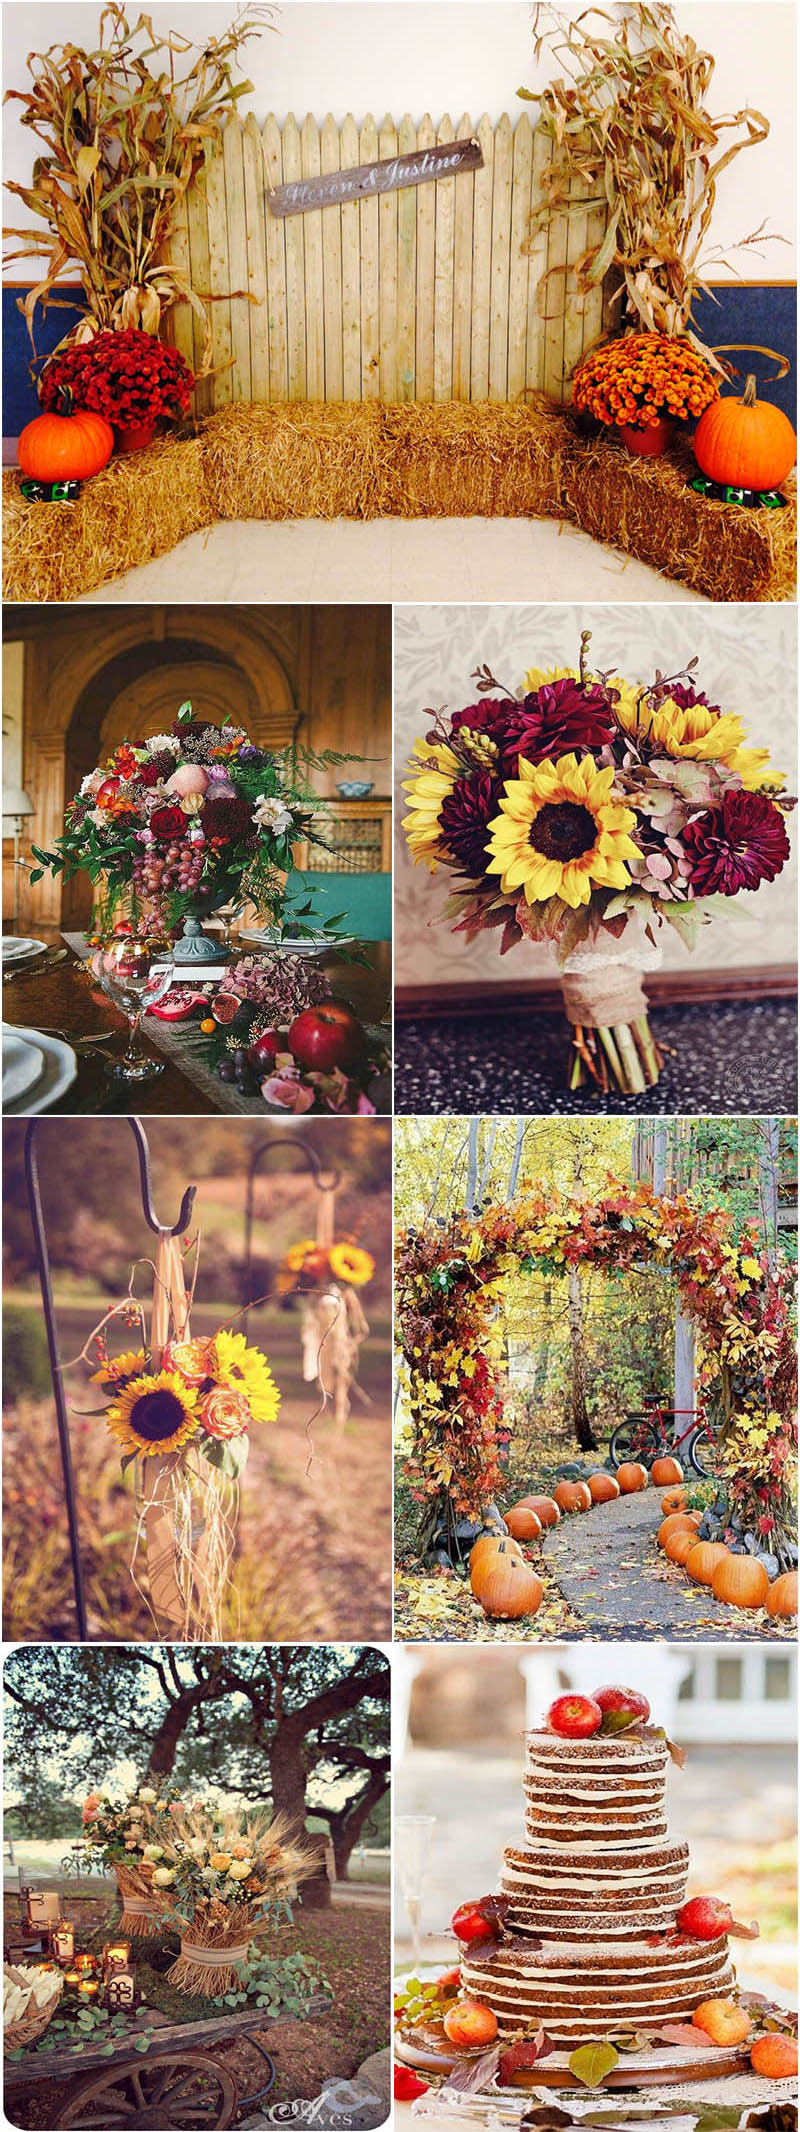 eyeful and elegant fall harvest wedding ideas